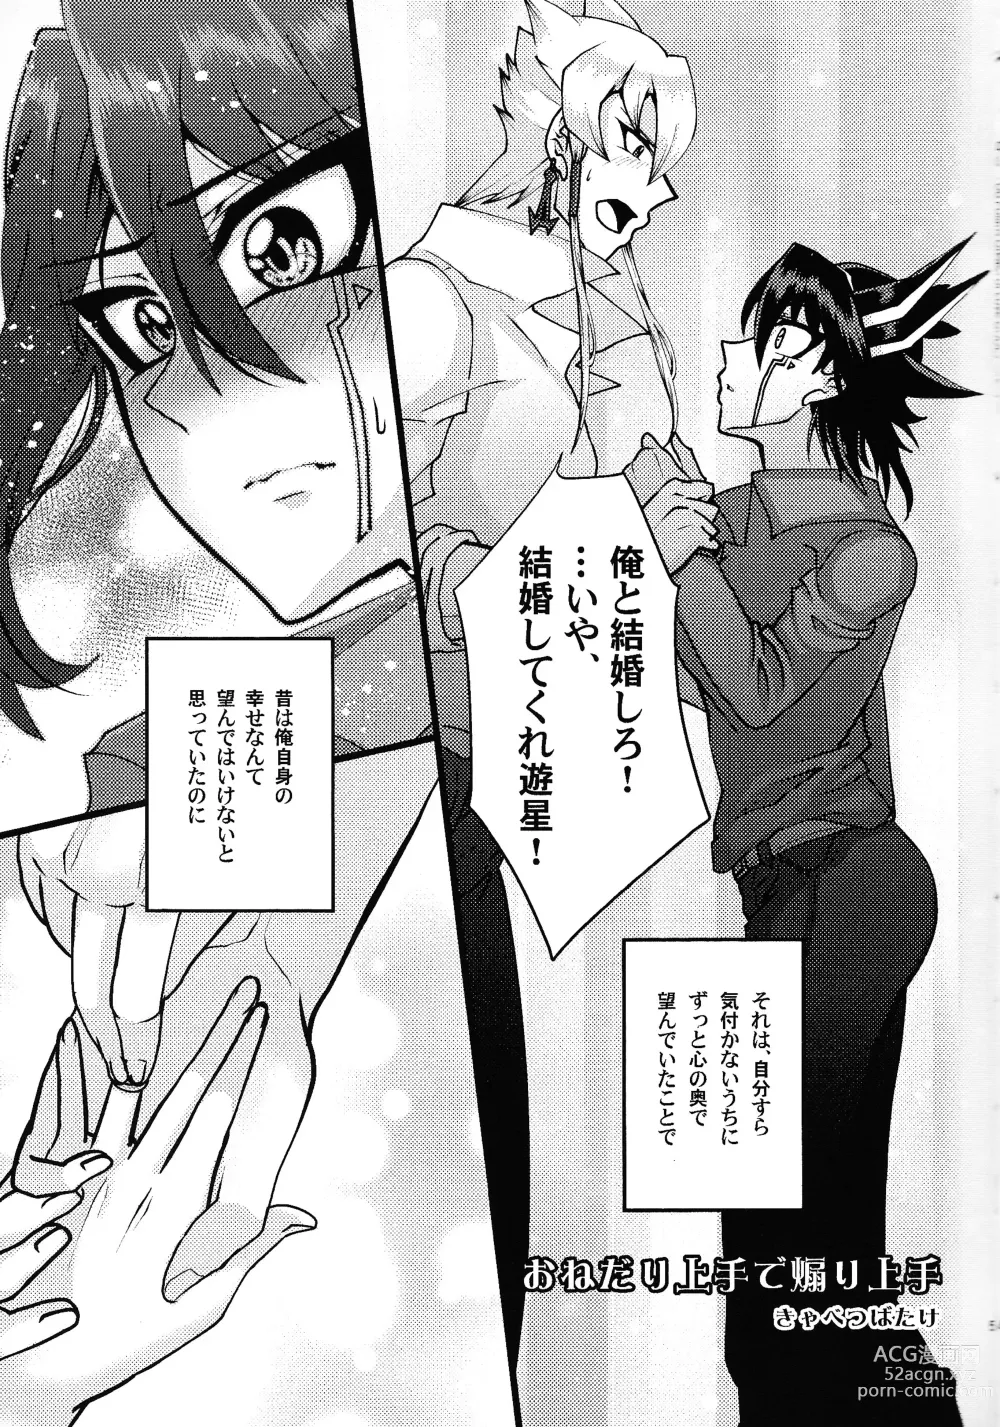 Page 5 of doujinshi Do Polaris Dream of Love DOOL?